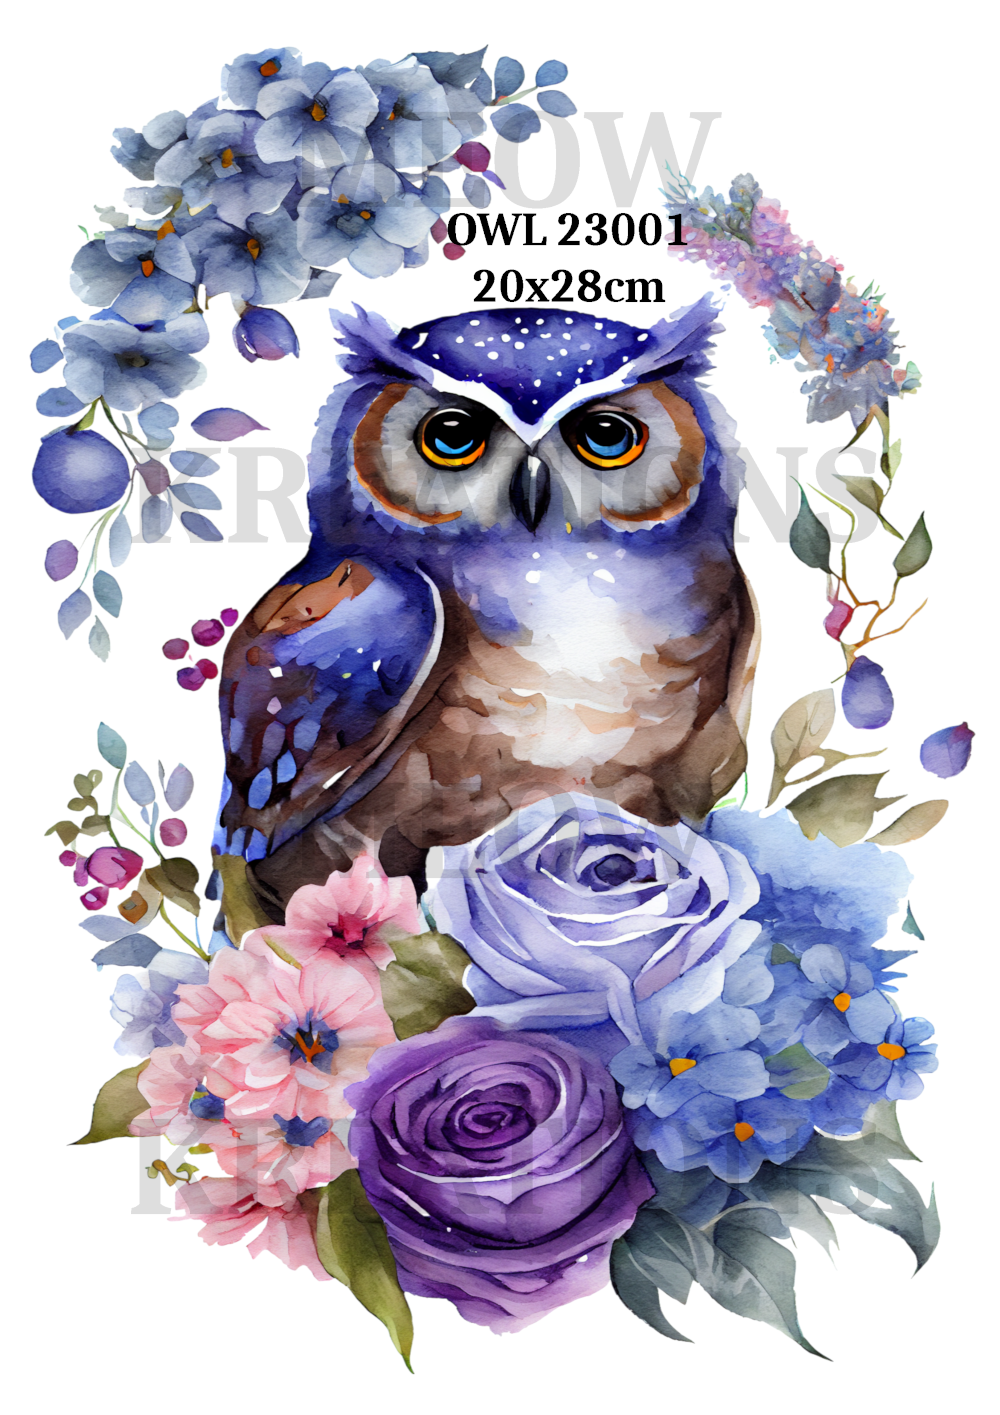 OWL 23001